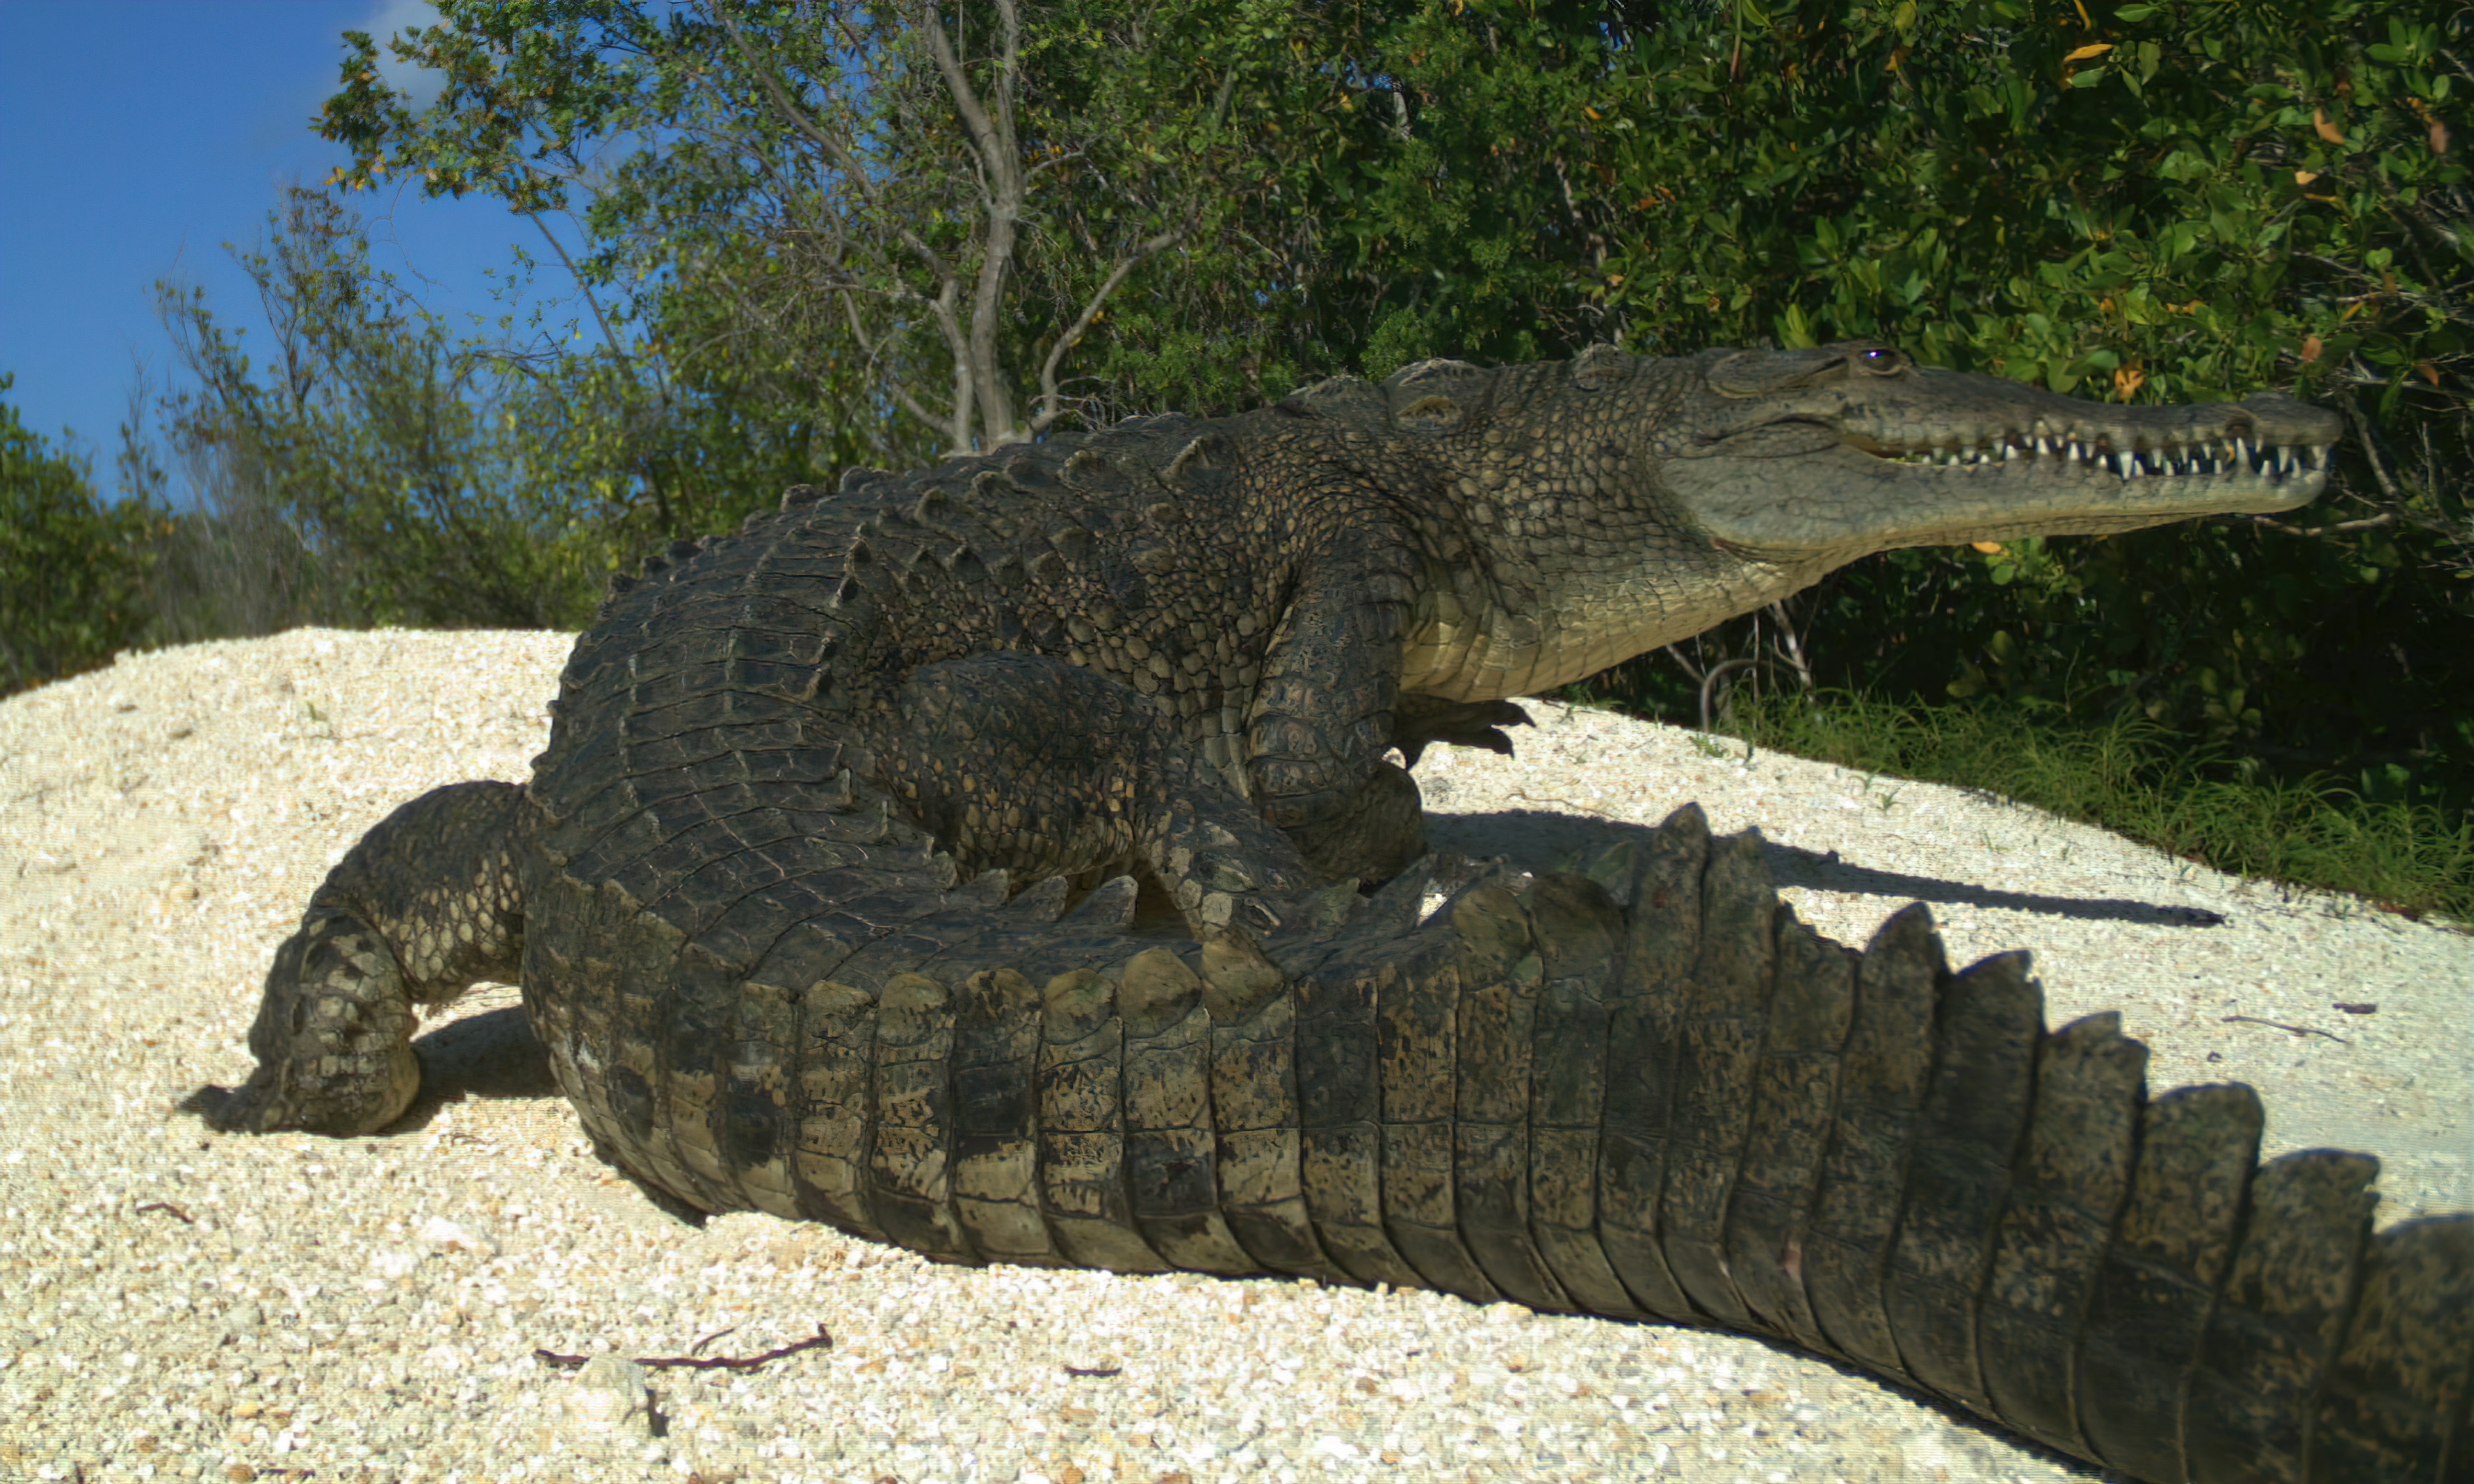 American crocodile at Crocodile Lake National Wildlife Refuge